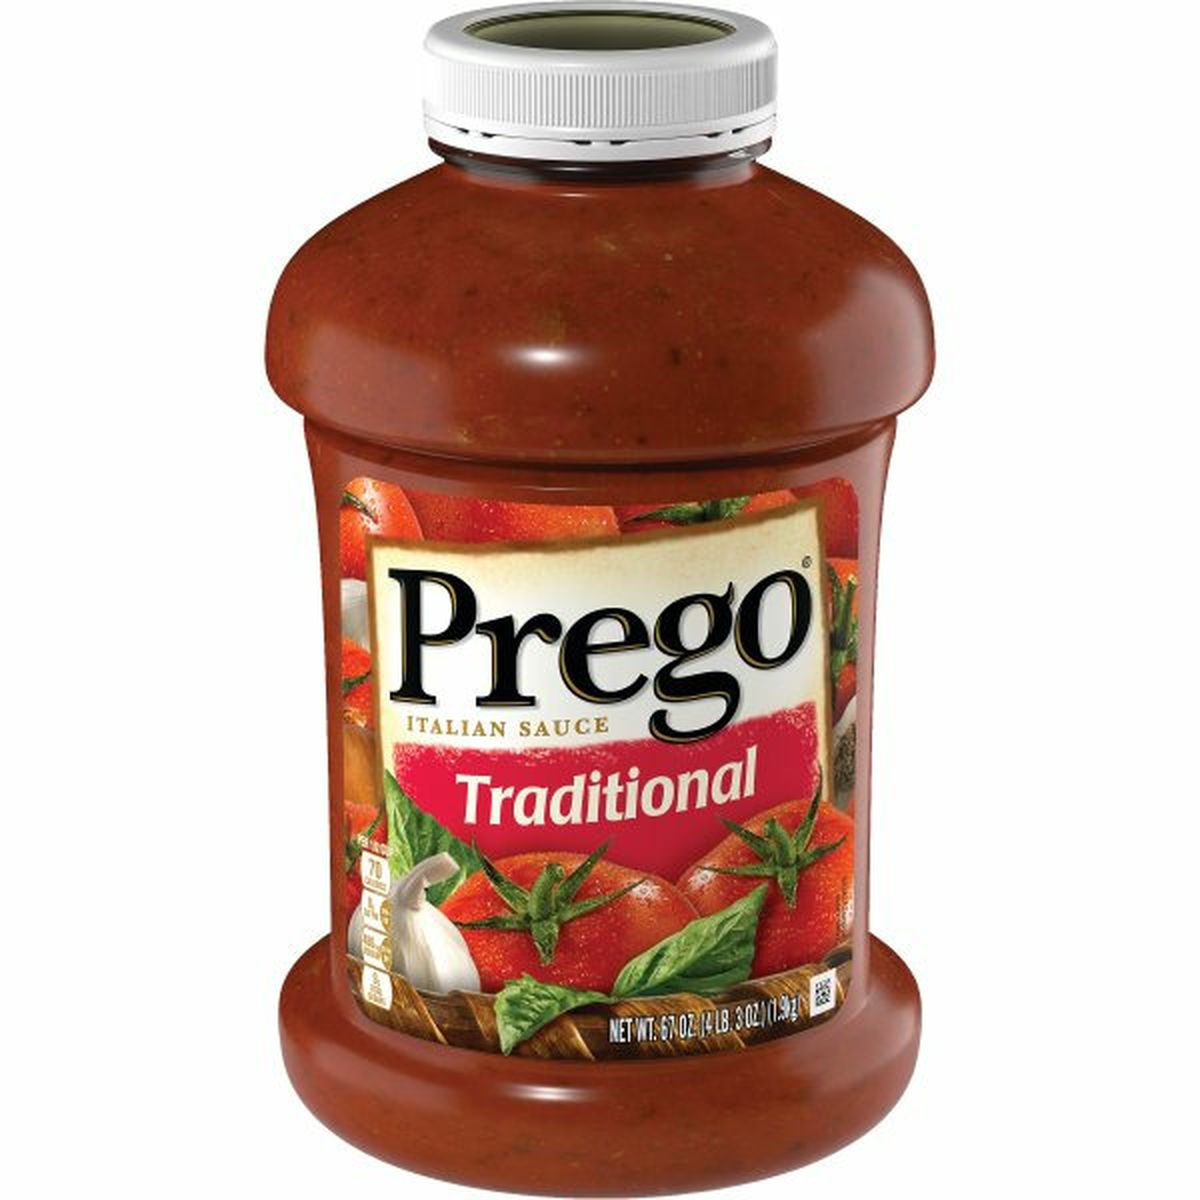 Calories in Pregos Traditional Italian Sauce